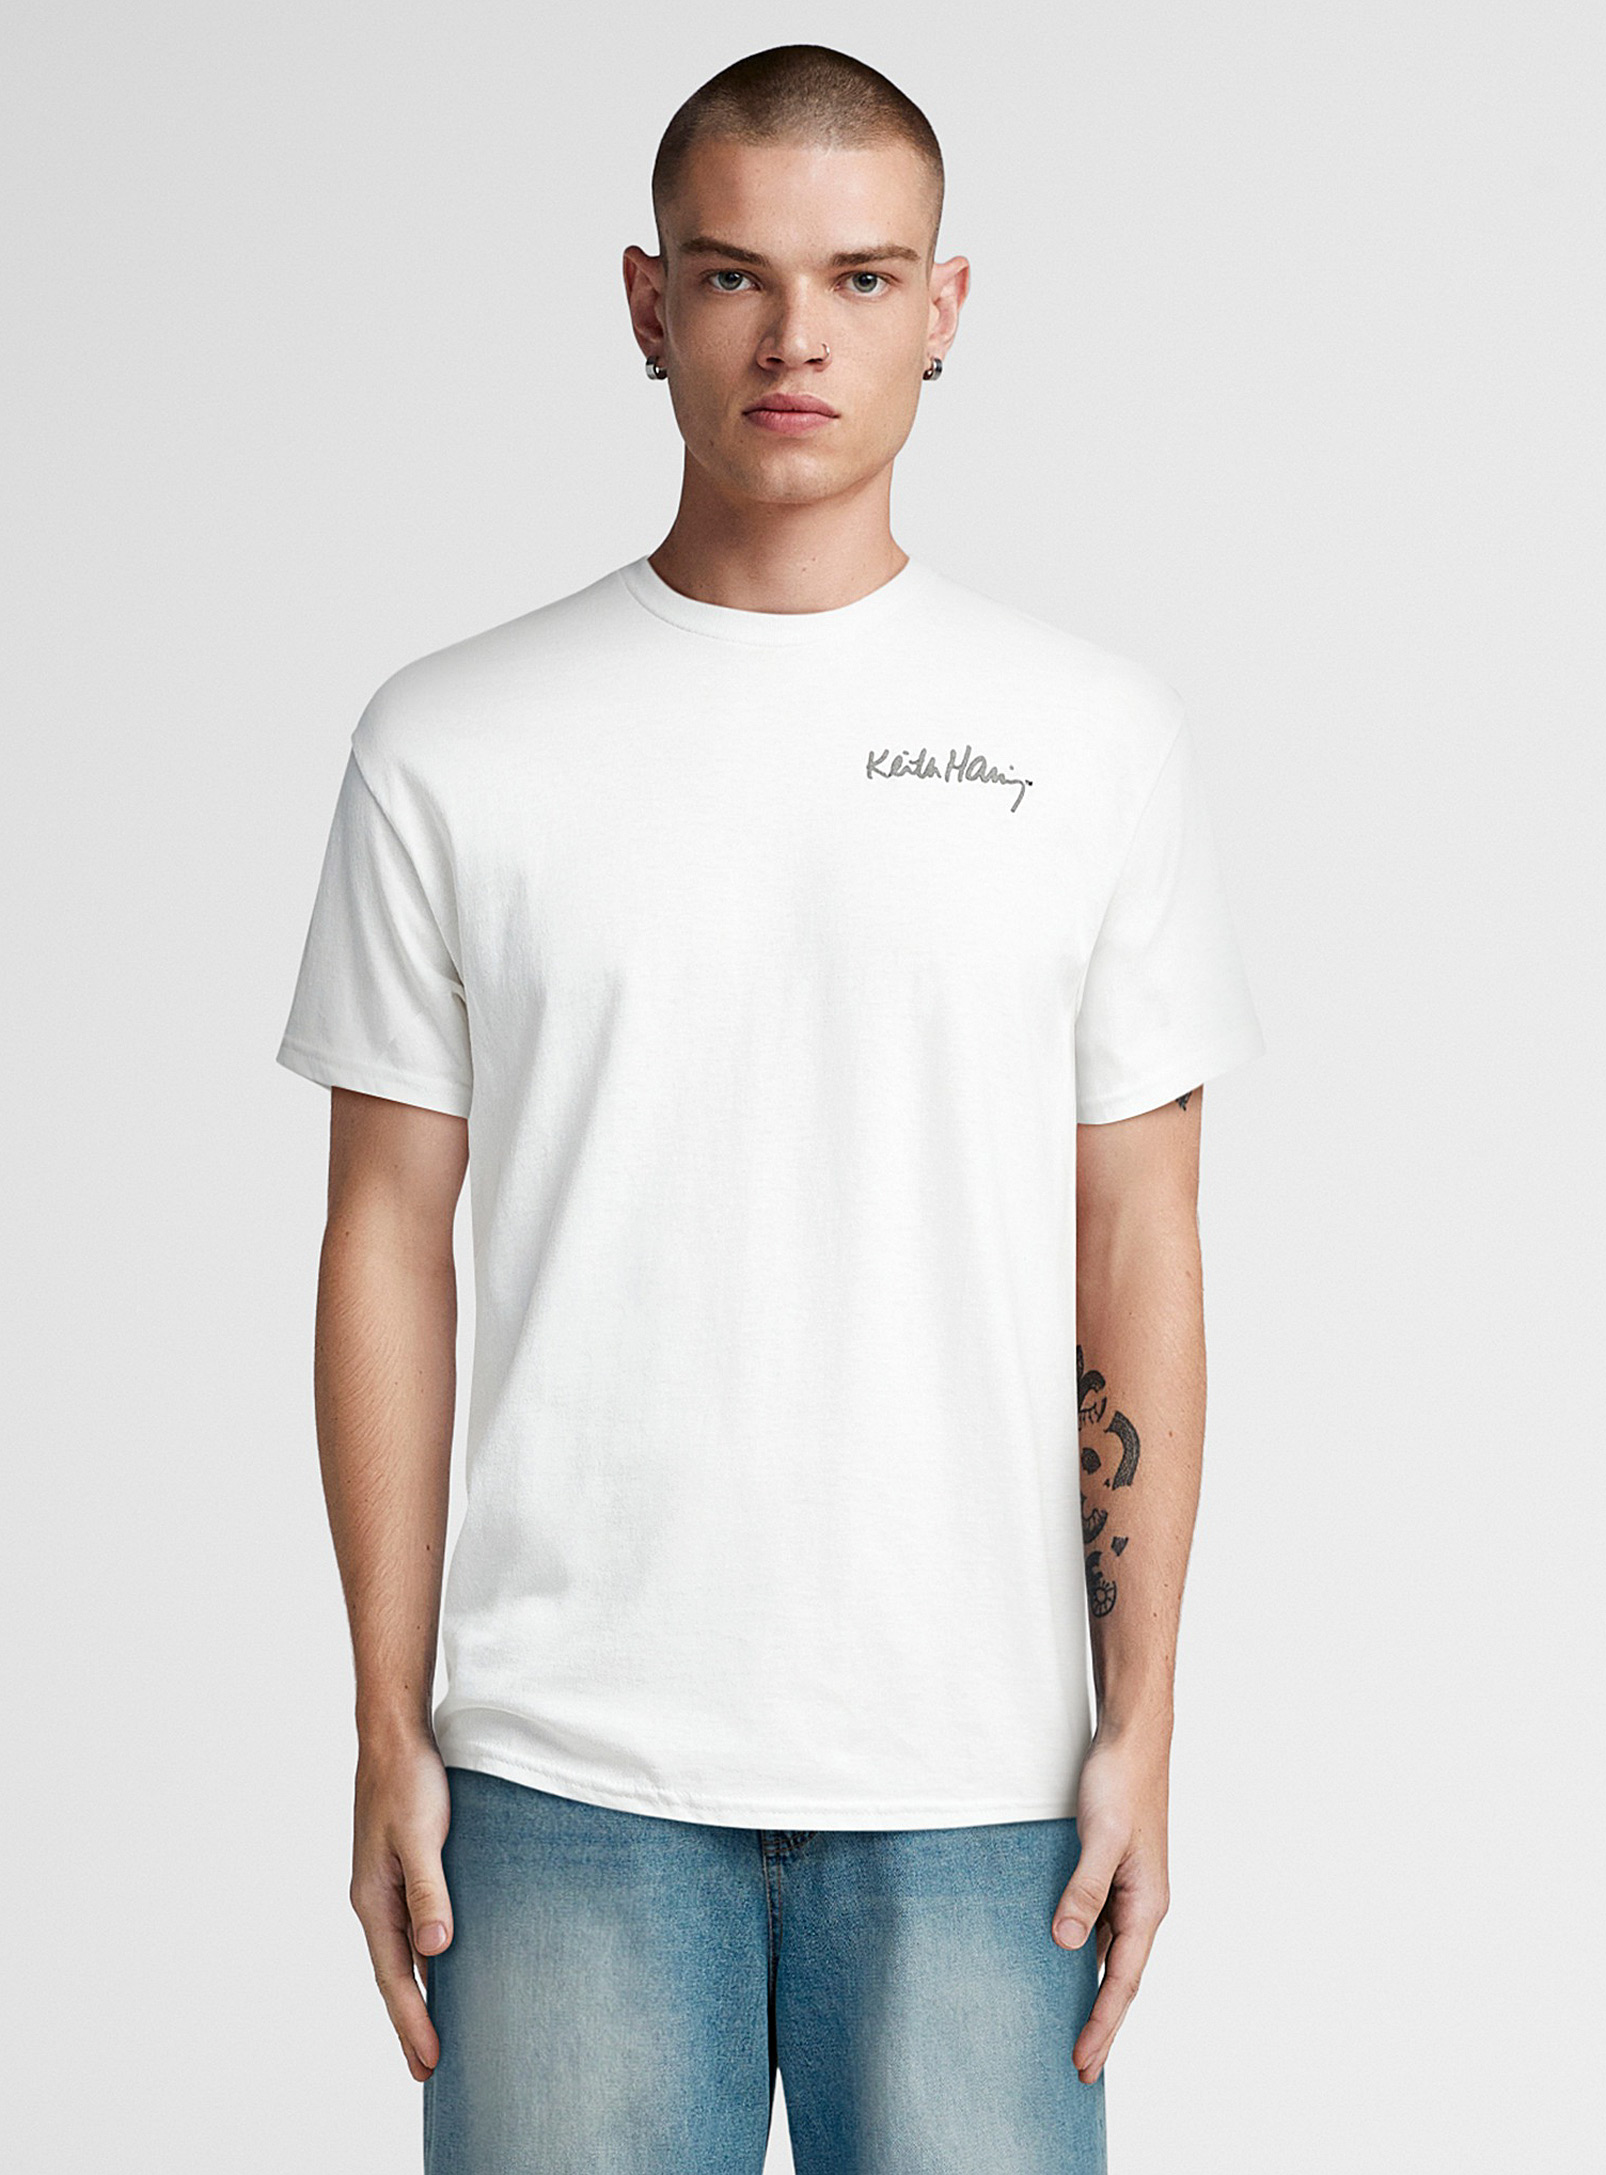 Djab Keith Haring T-shirt In White